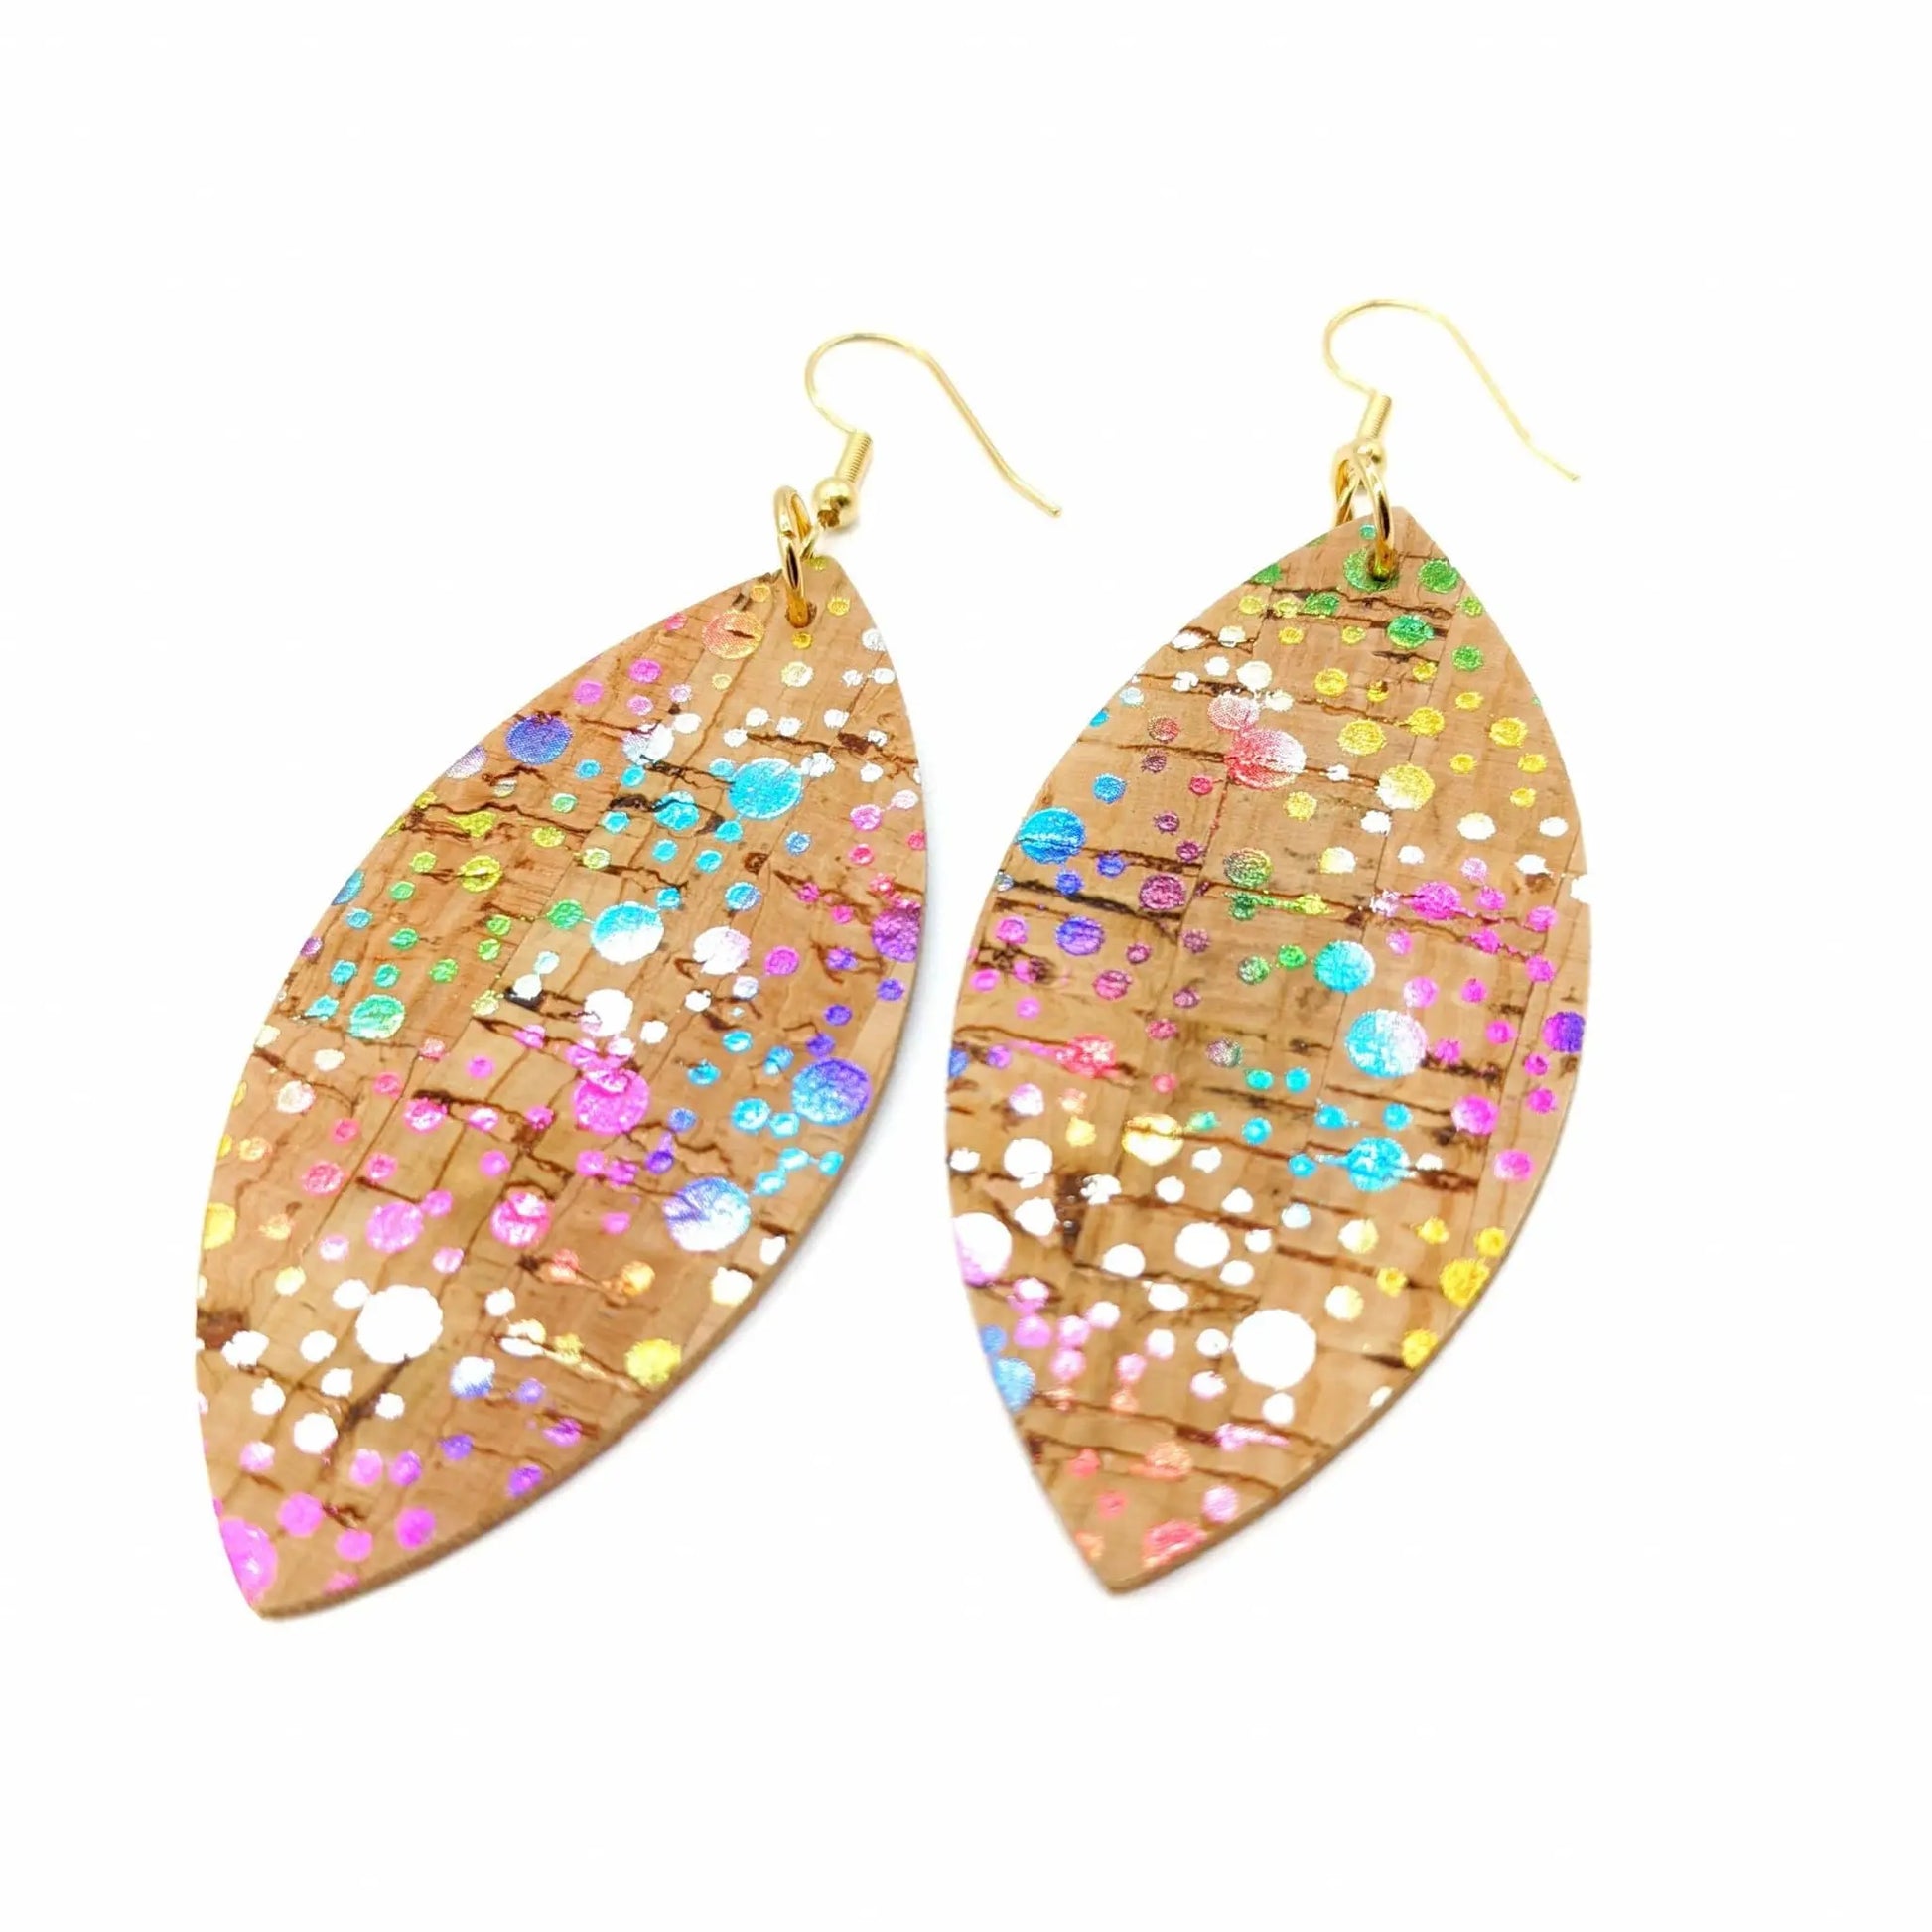 Rainbow Leaf earrings - Trend Tonic 